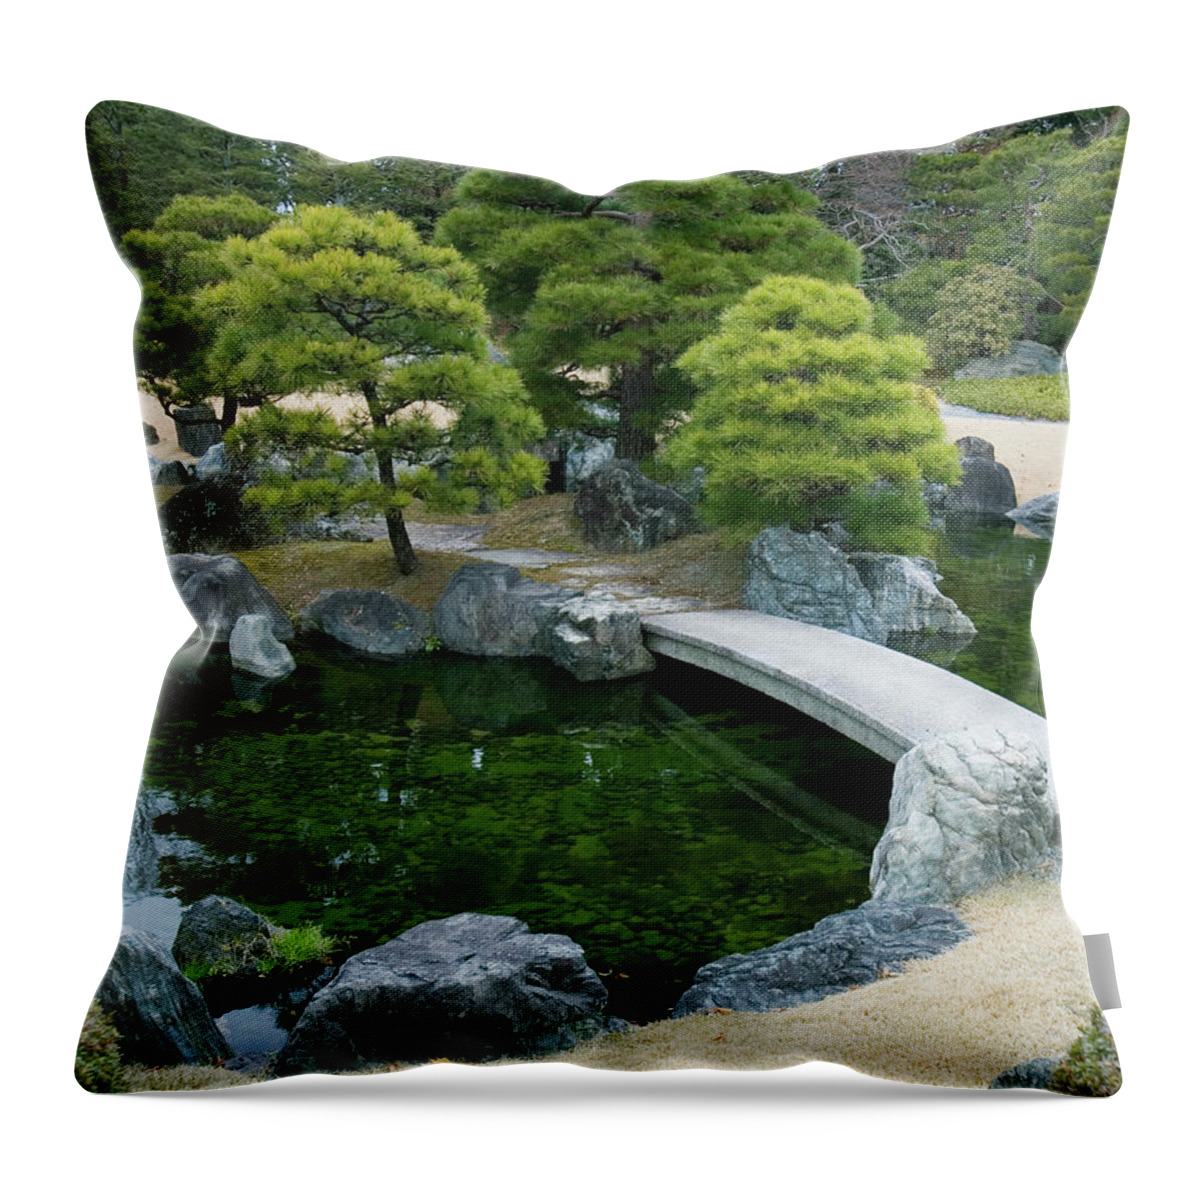 Garden Feature Throw Pillow featuring the photograph Japan, Kyoto, Nijo Castle Garden by Grant V. Faint